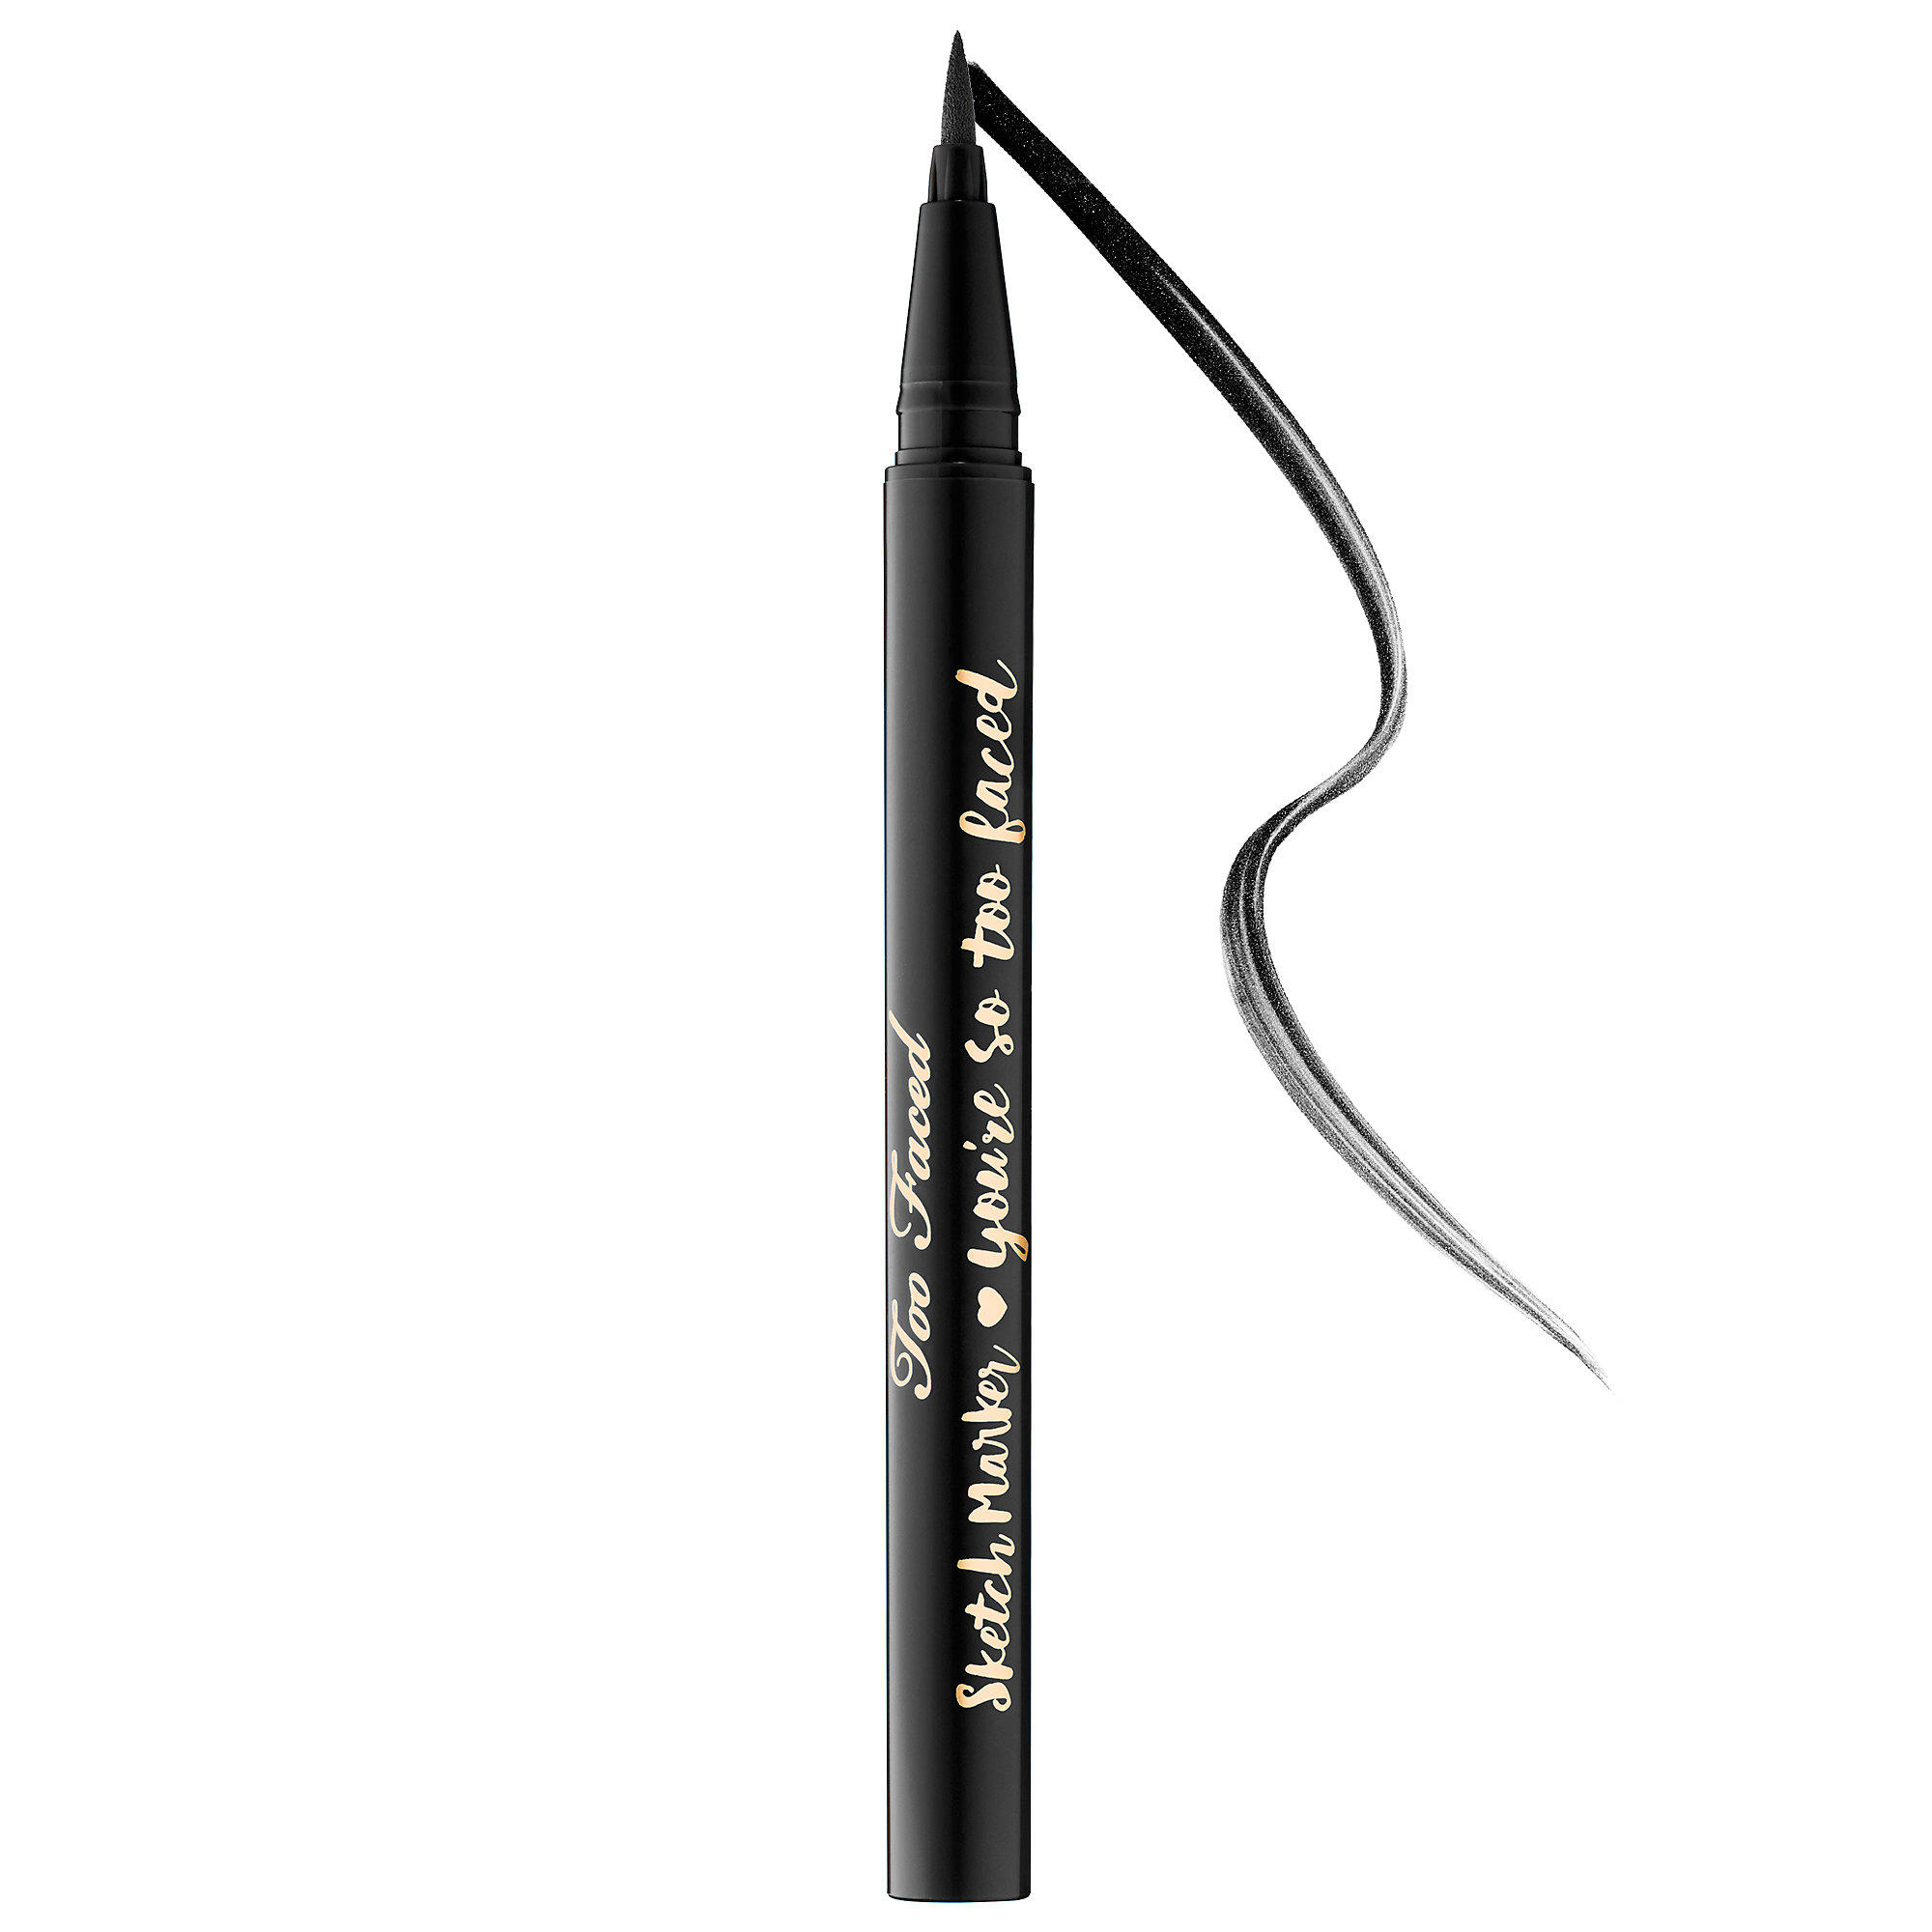 Too Faced Sketch Marker Liquid Art Eyeliner Black | Glambot.com - Best